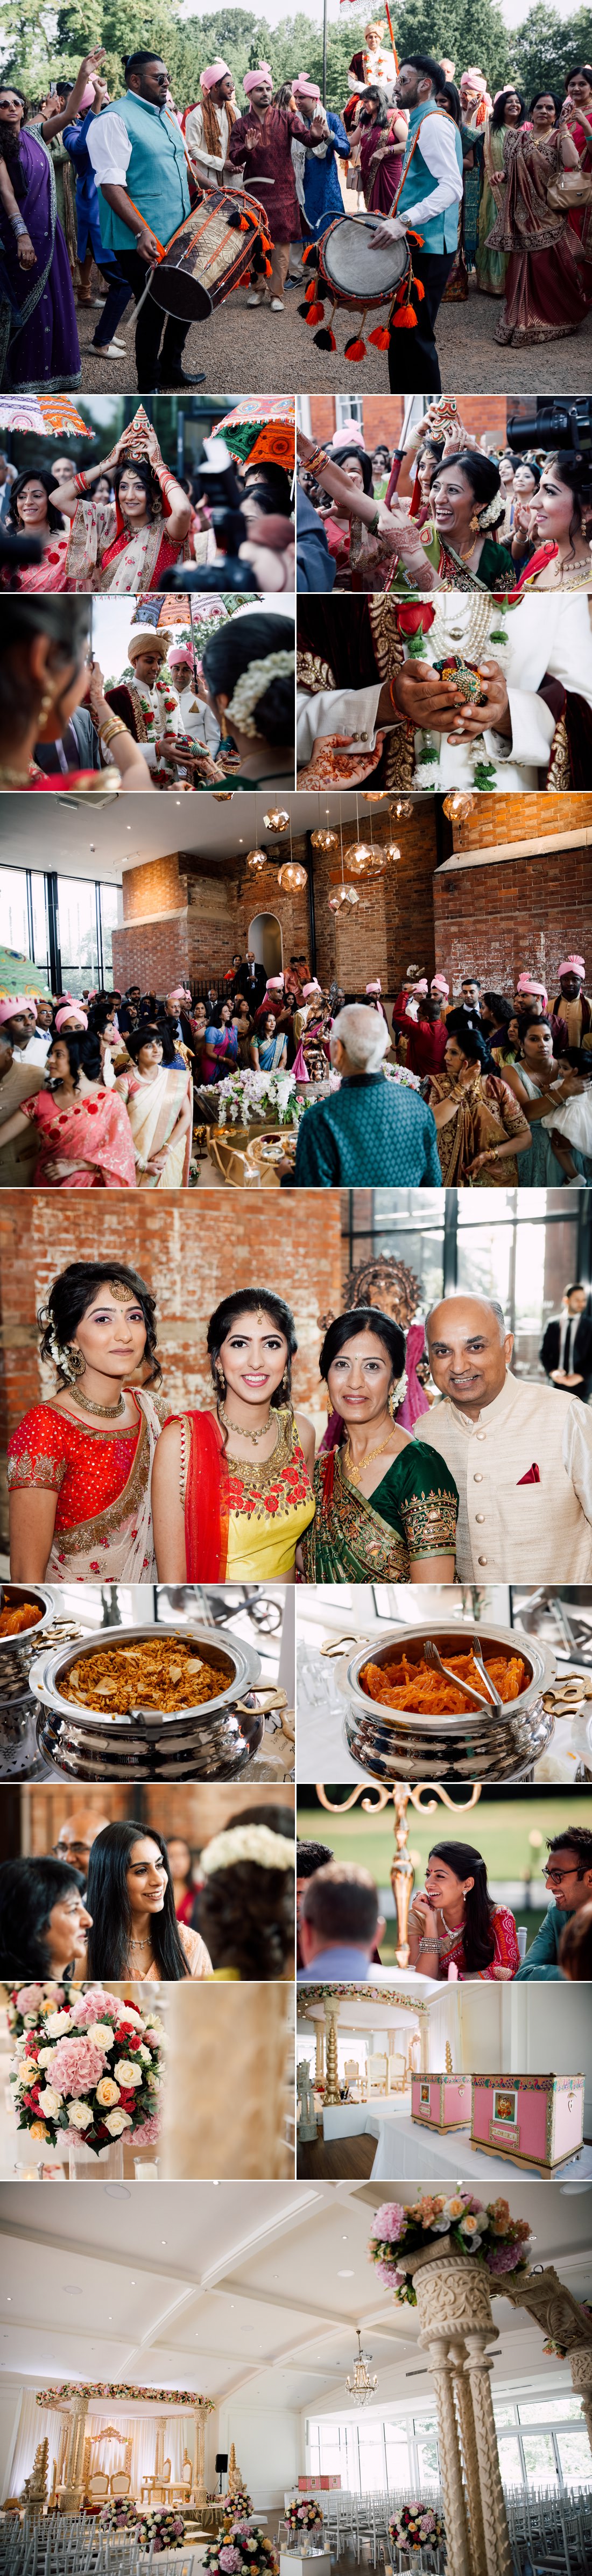 winstanley house - indian wedding photo 4